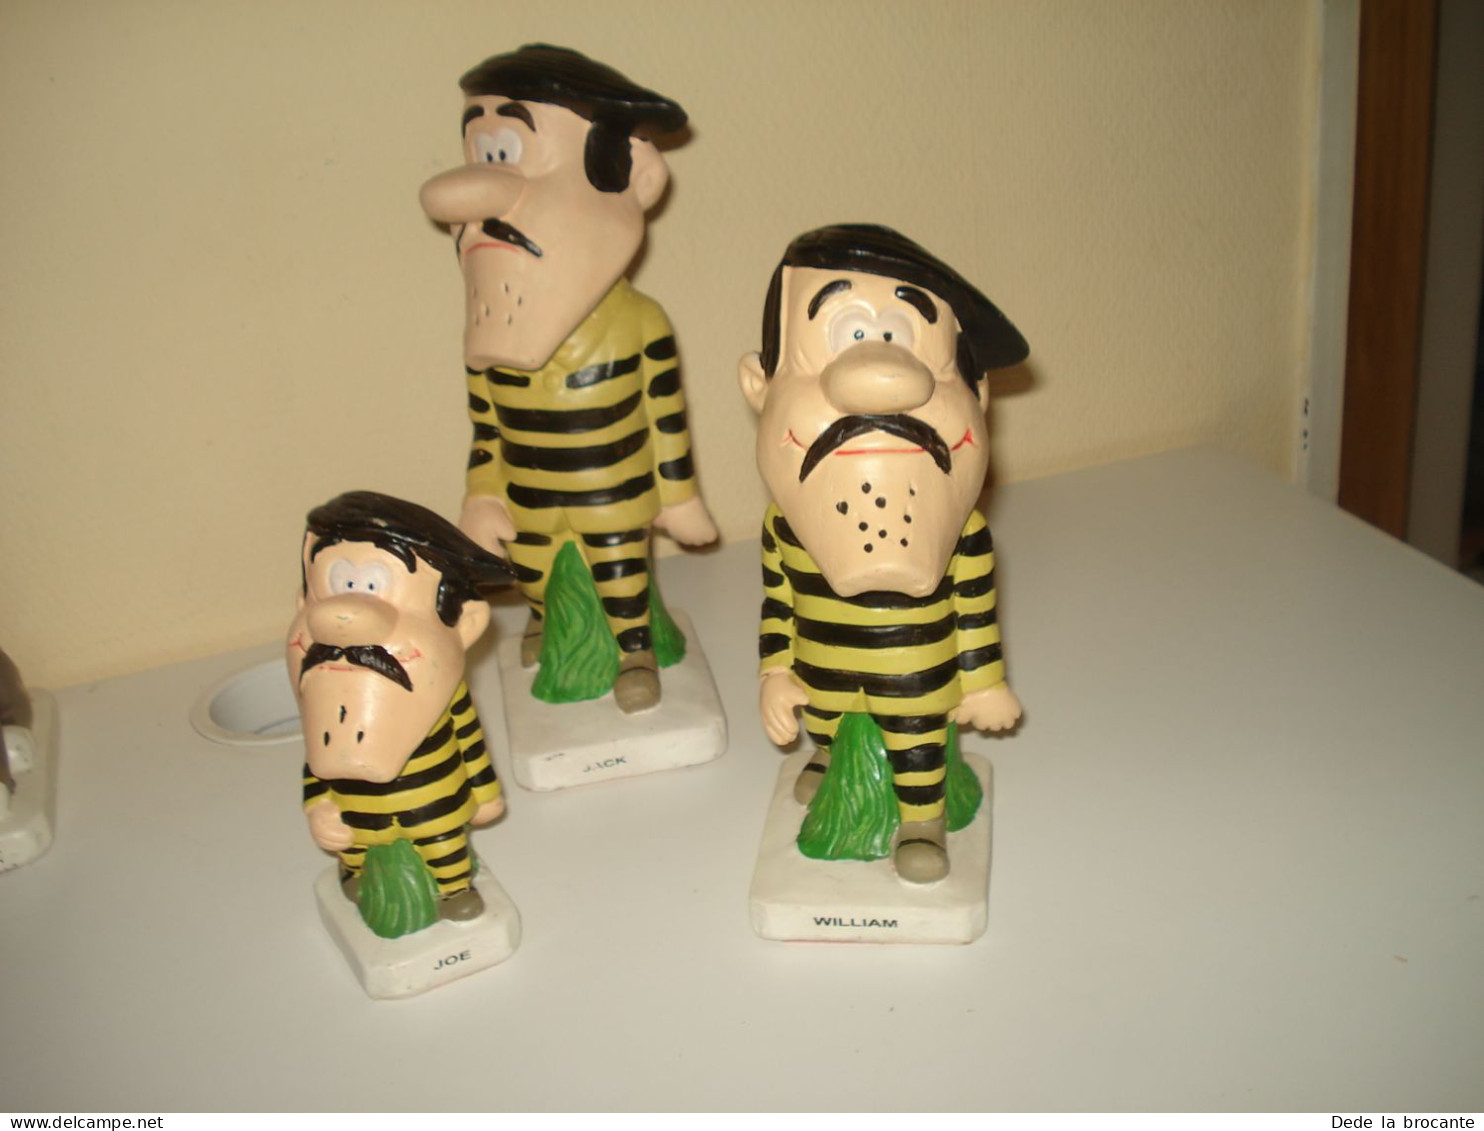 O18/ RARE Lot De 6 Figurines - Famille Dalton - Rantamplan - Jolly Jumper - 1997 - Little Figures - Plastic